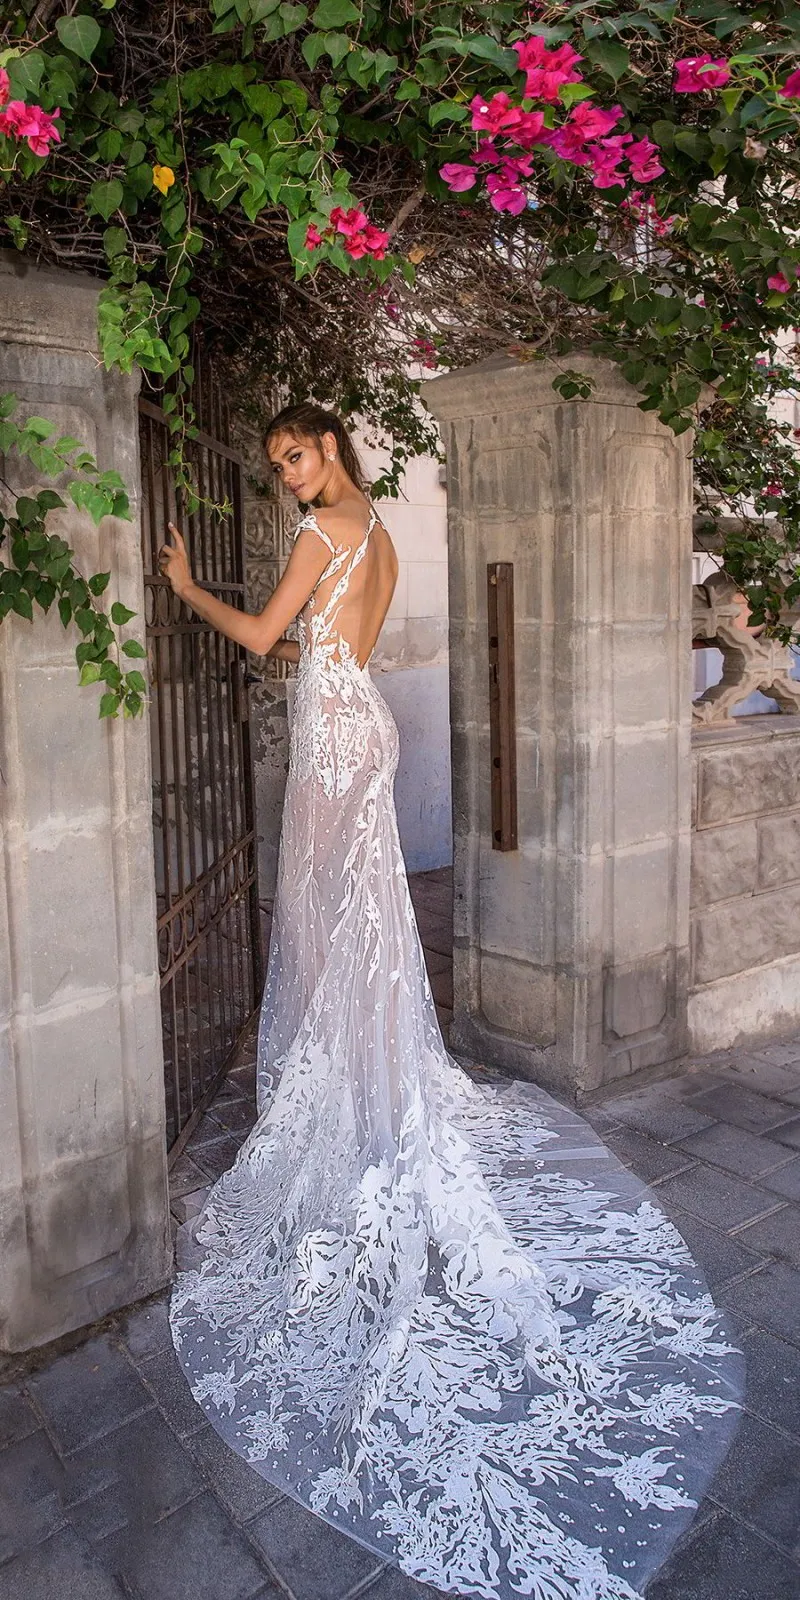 2019 Elihav Sasson robes de mariée sirène col transparent dentelle robes de mariée vestido de novia Cap manches plage robe de mariée 192a